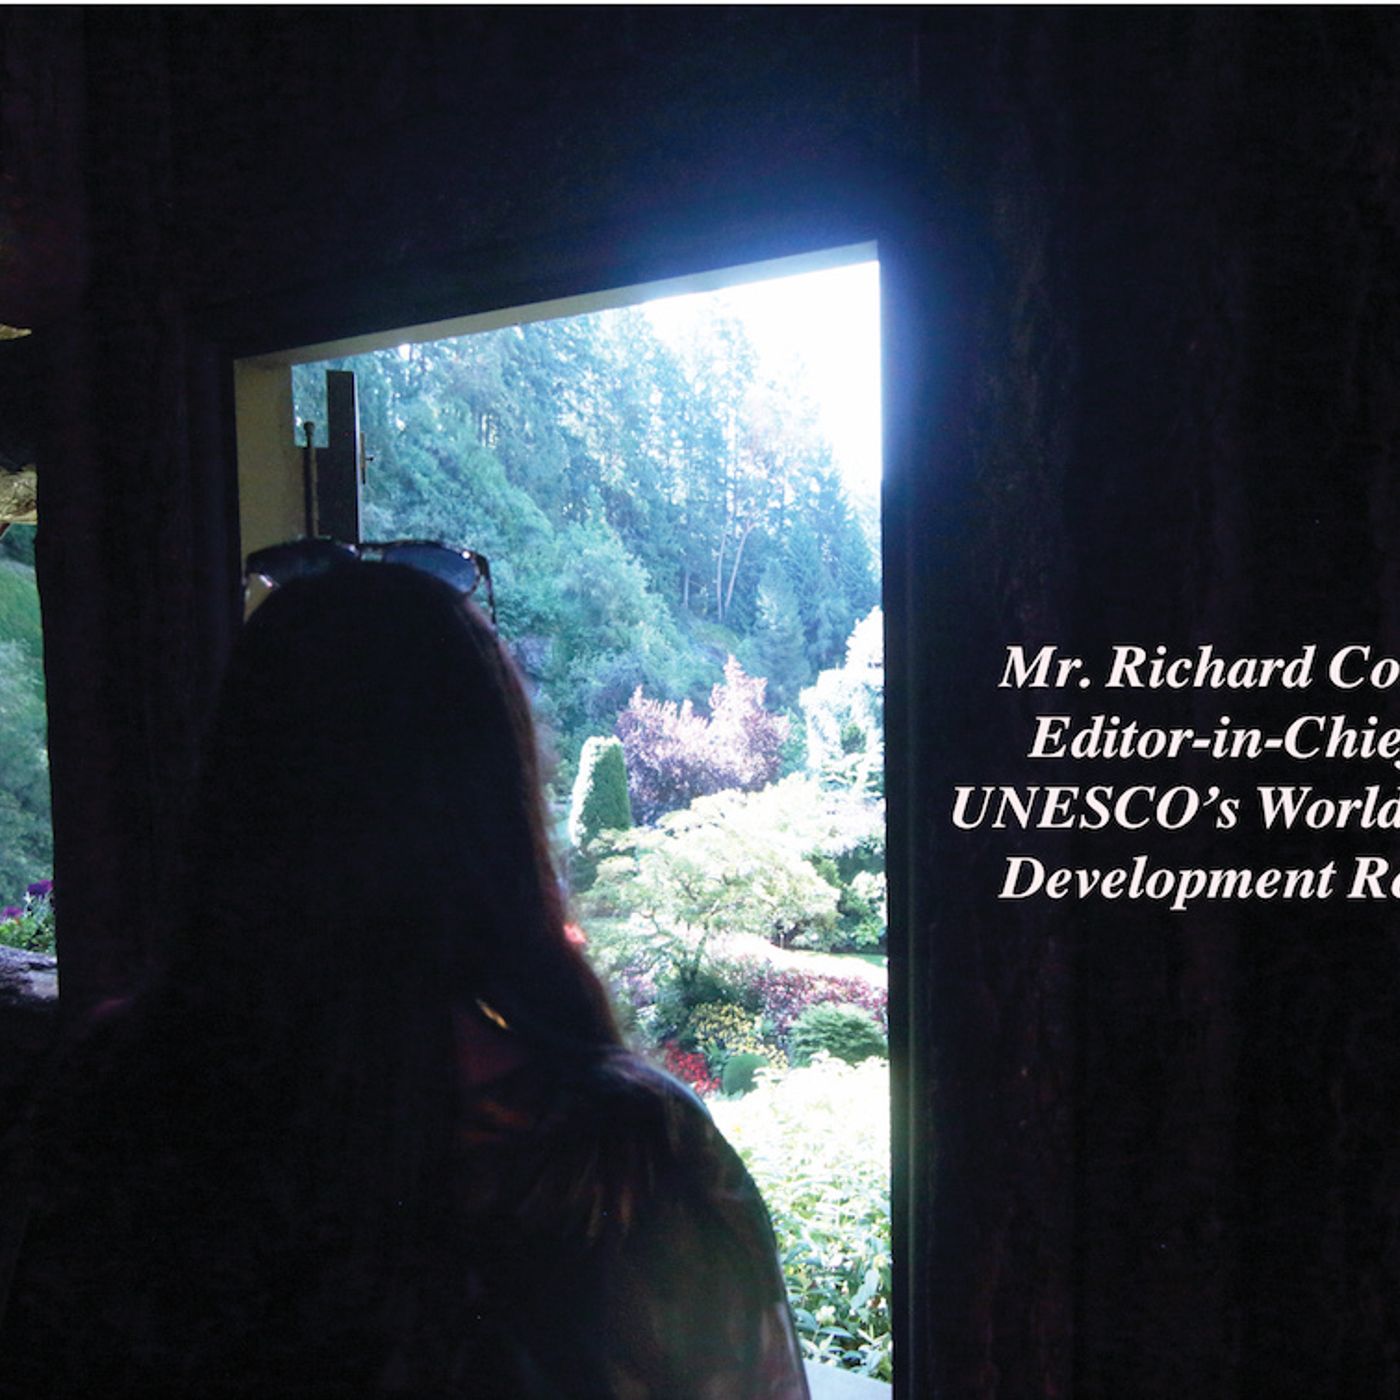 Mr Richard Connor Editor-in-Chief of UNESCO’s World Water Development Report